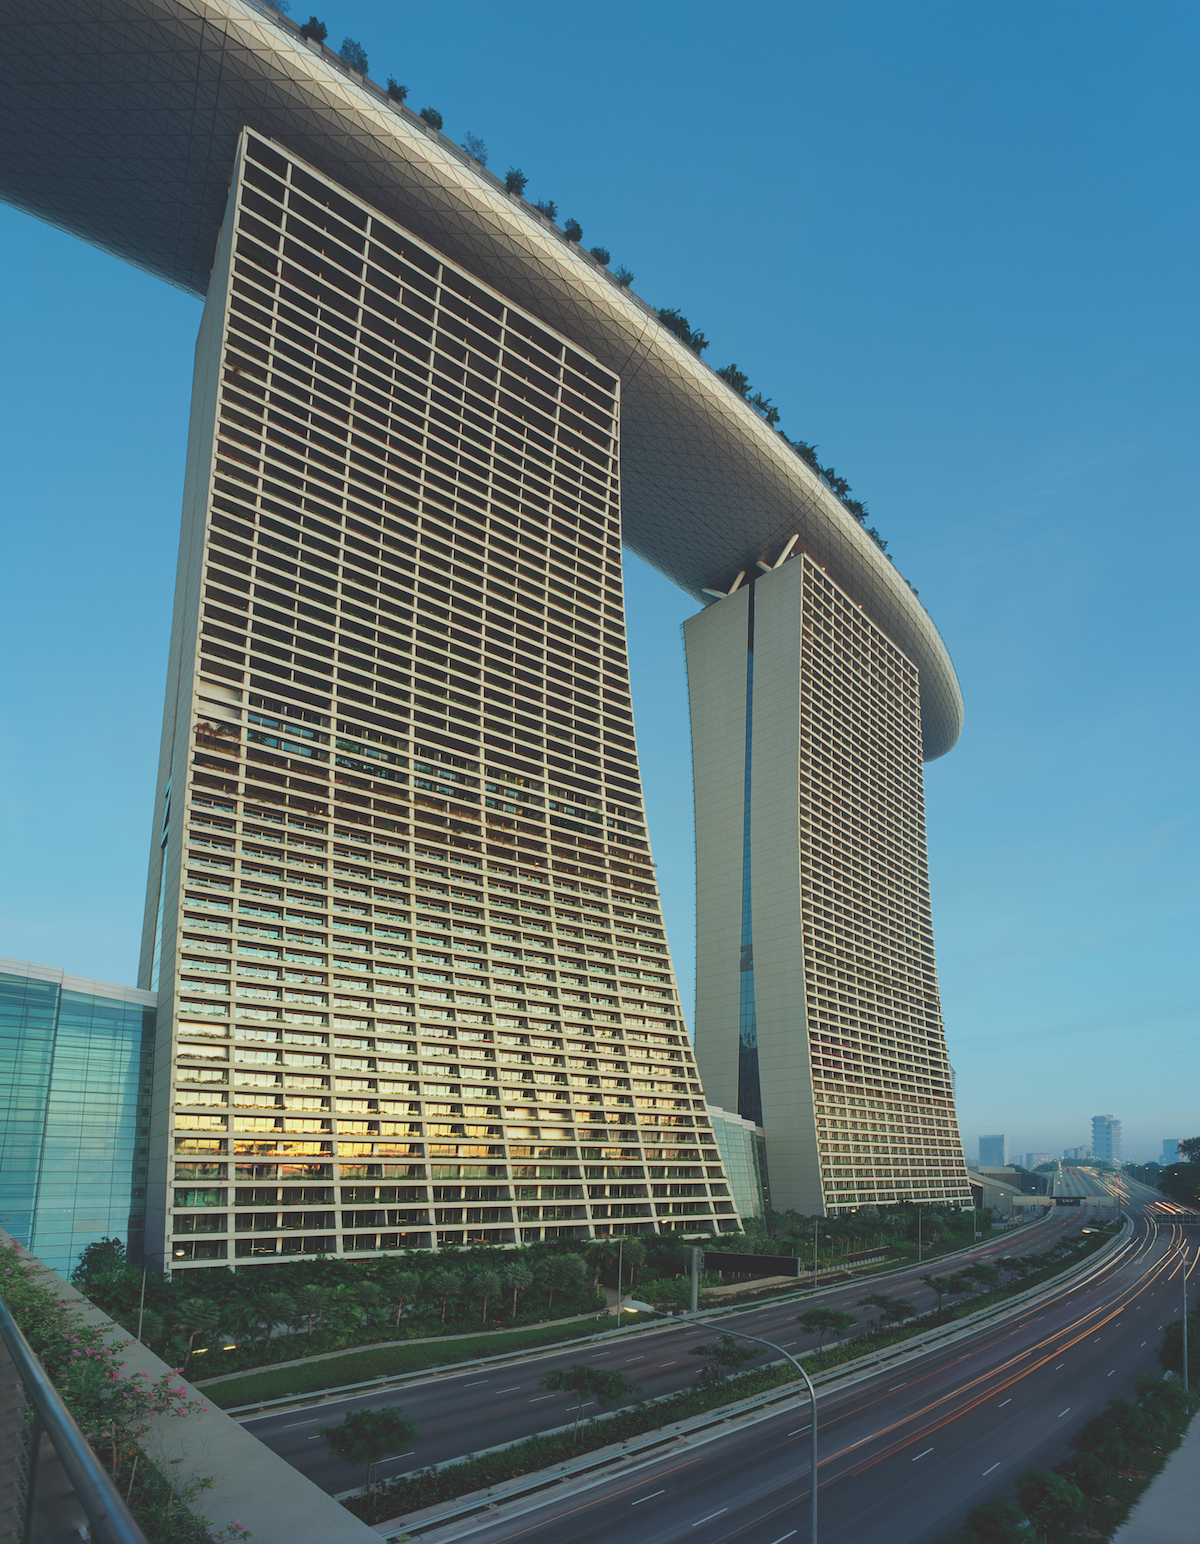 Singapore’s iconic Marina Bay Sands resort.